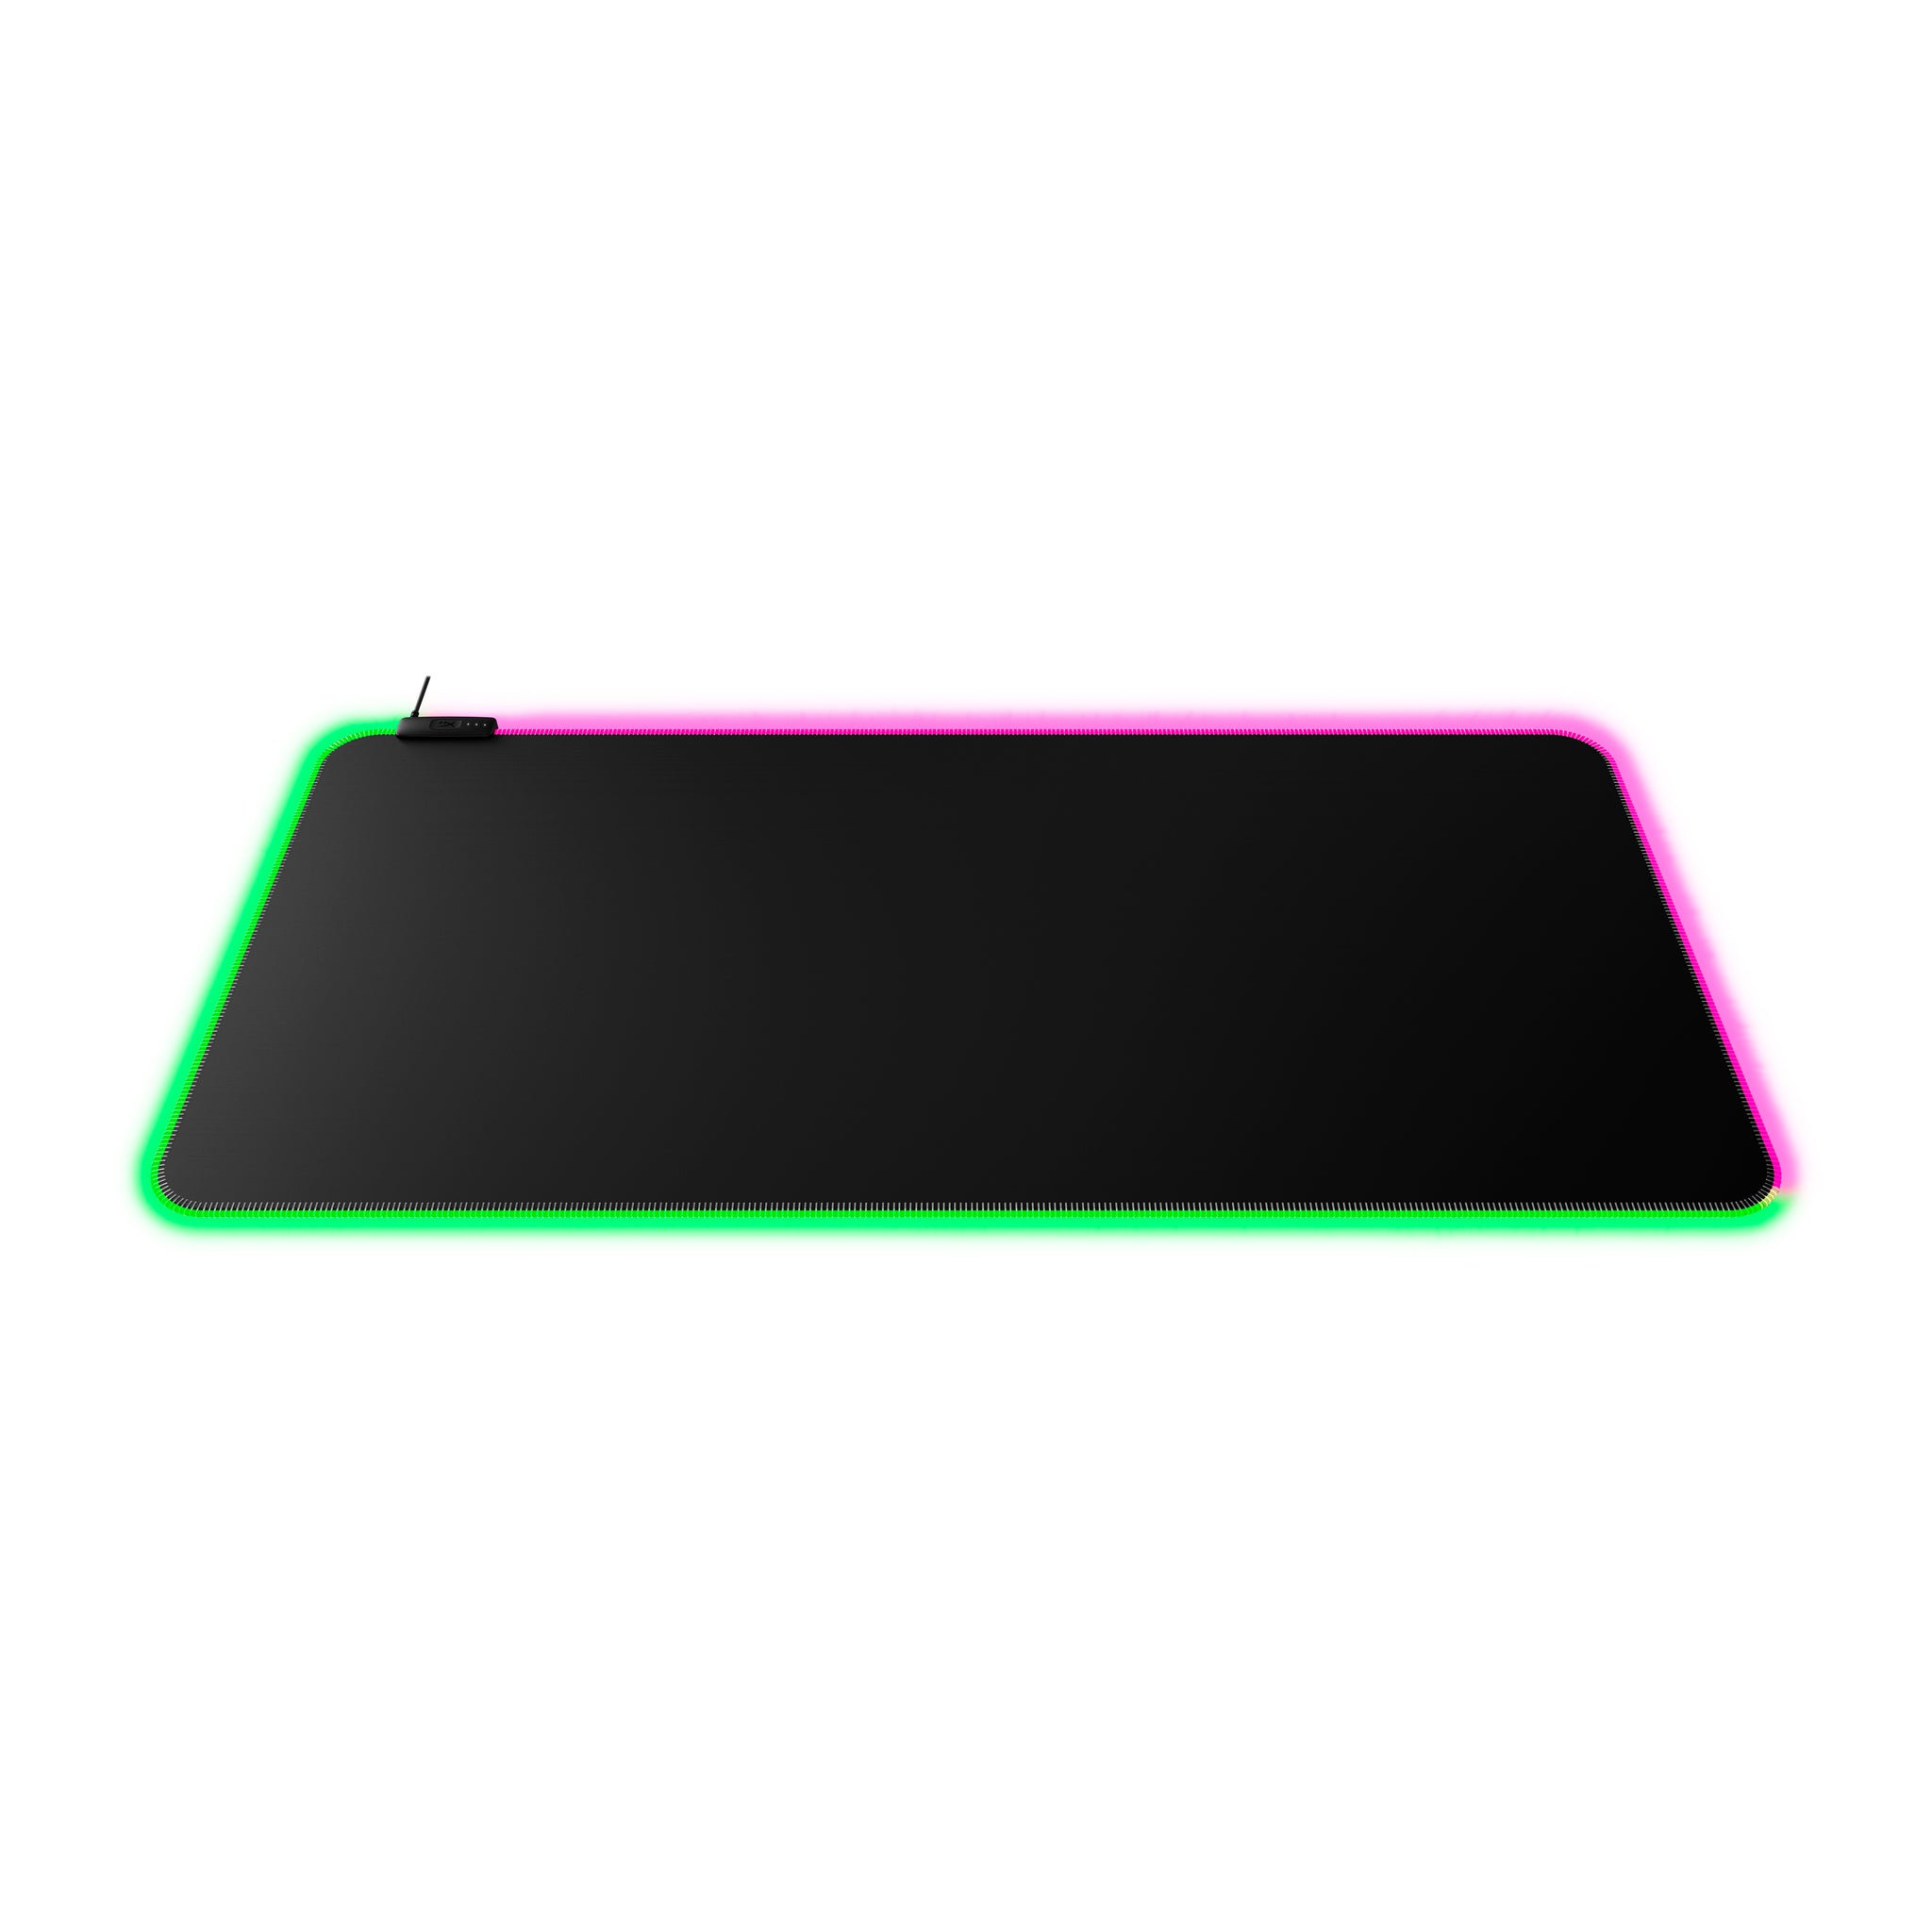 HyperX Pulsefire Mat RGB Front angled view highlighting RGB